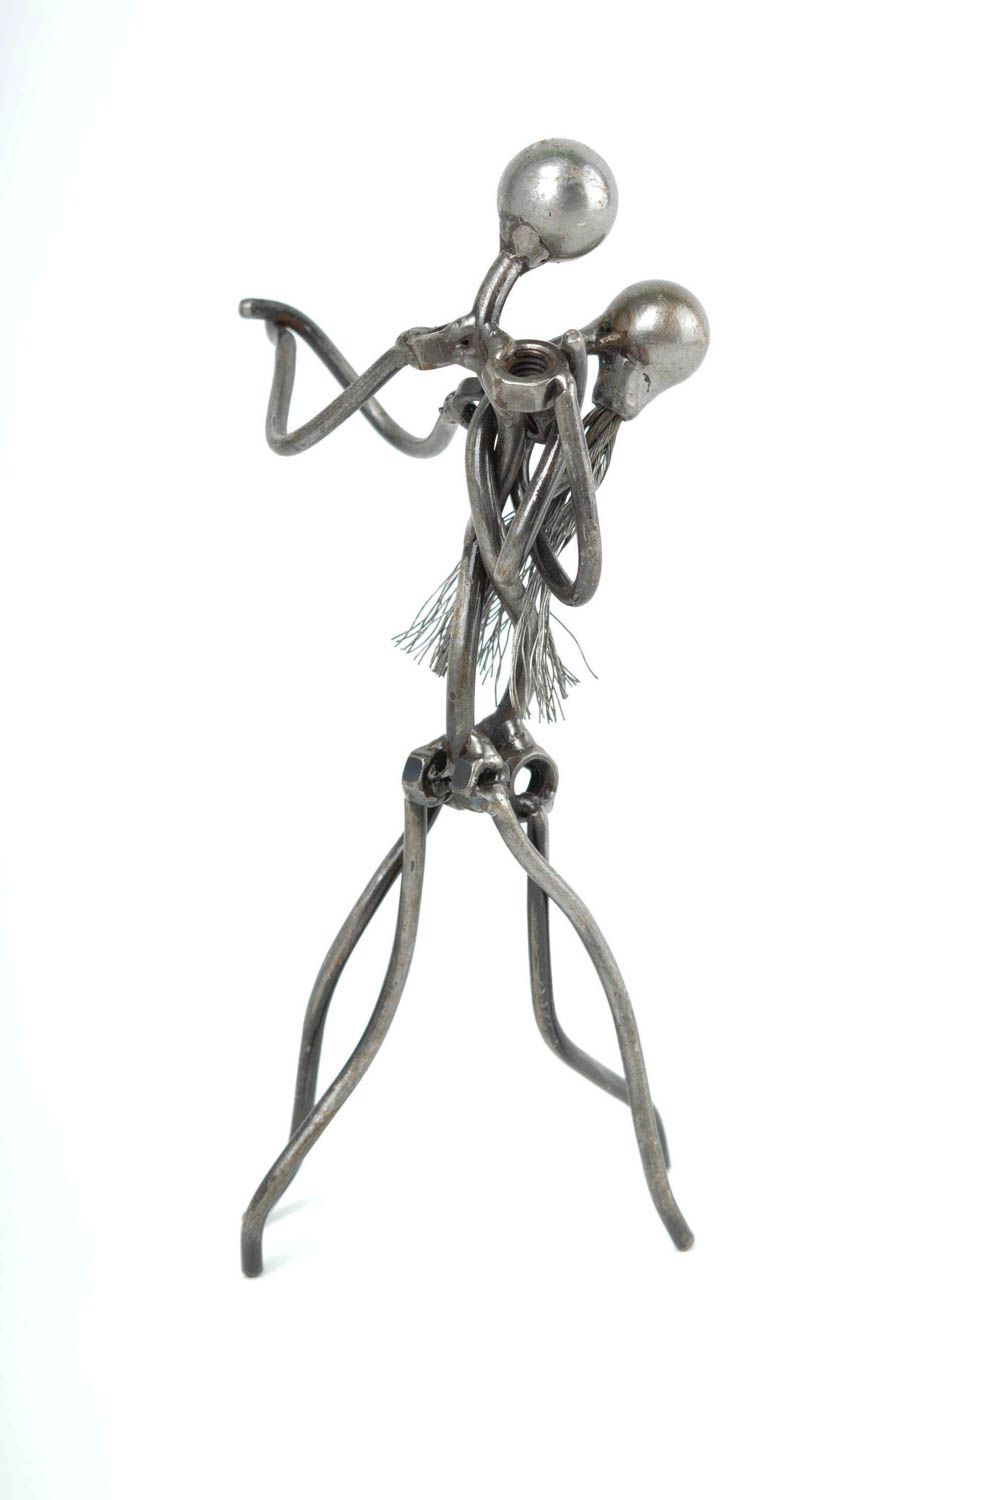 Unusual handmade figurine romantic metal figurine gift ideas decorative use only photo 2